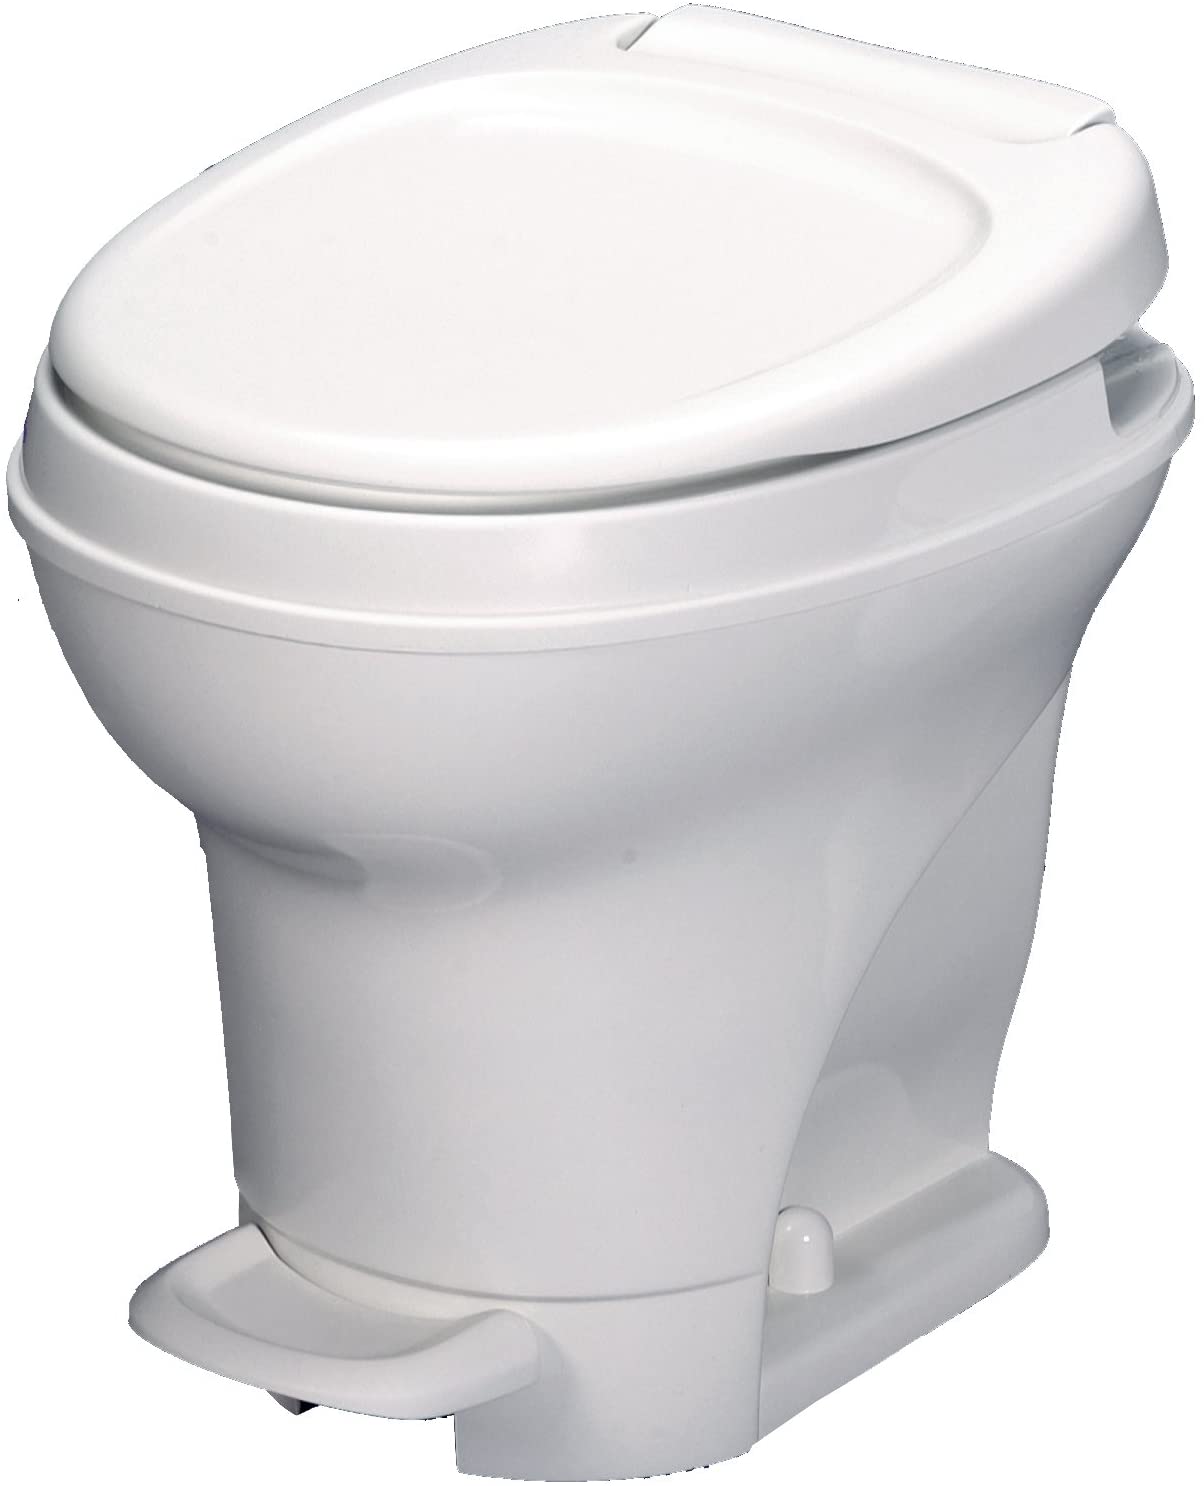 Thetford 31671 Pedal Flush RV Toilet – The Best High Profile RV Toilet